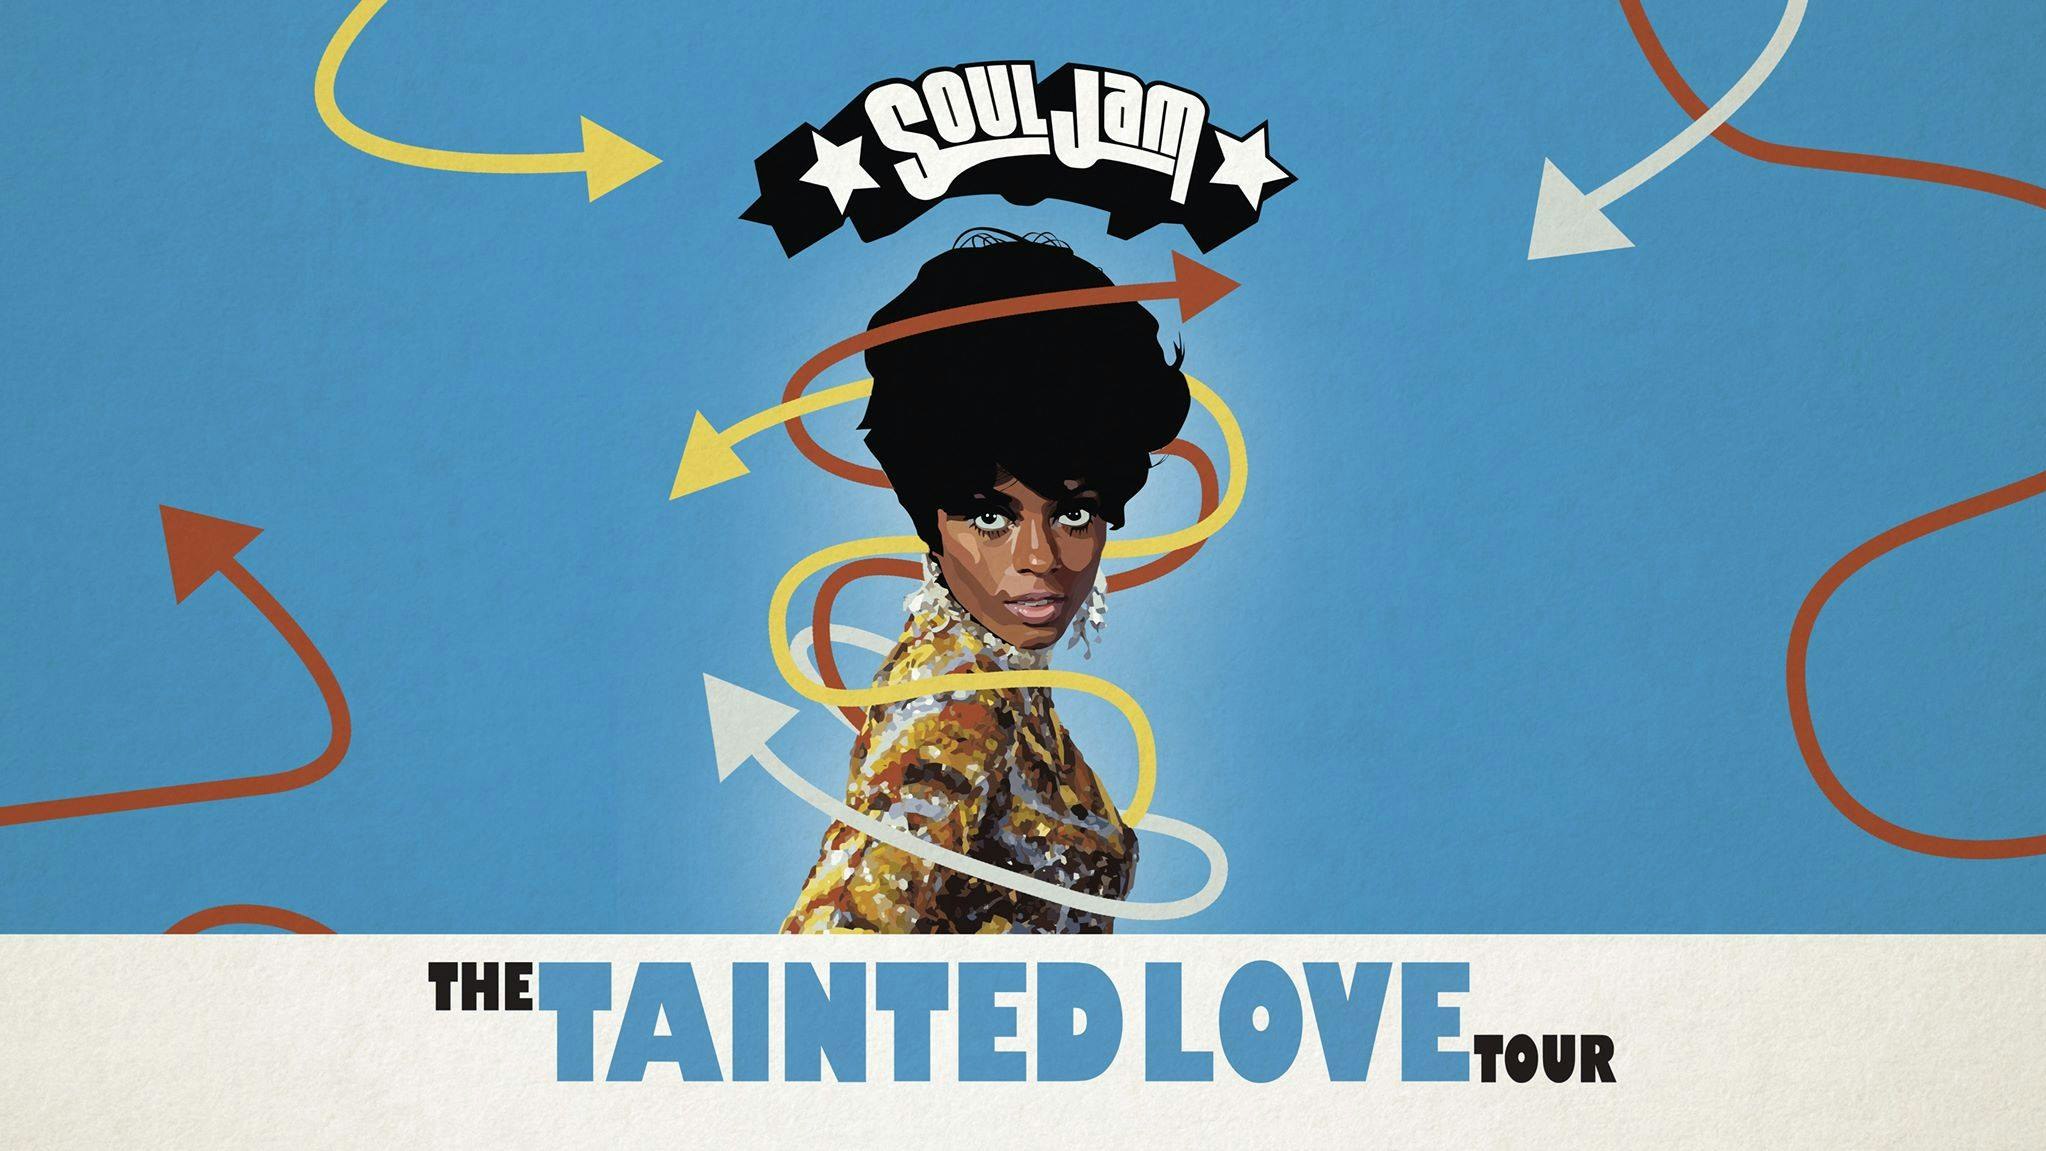 SoulJam / The Tainted Love Tour